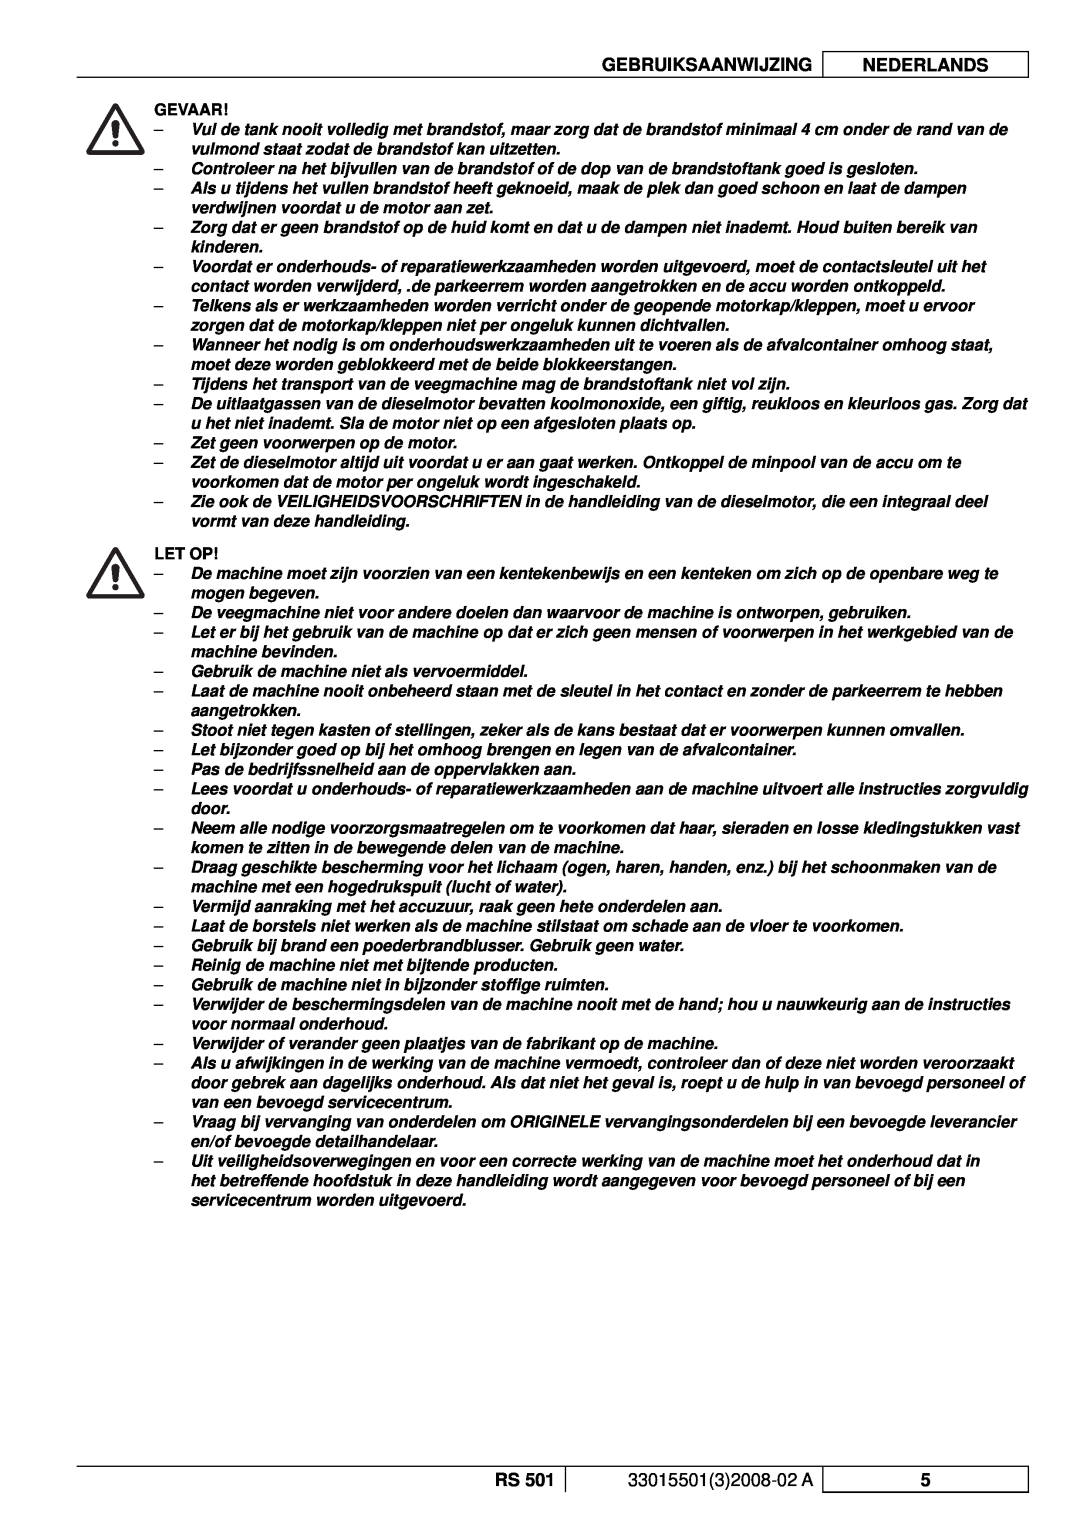 Nilfisk-ALTO RS 501 manuel dutilisation Gebruiksaanwijzing, Nederlands, 3301550132008-02A, Gevaar, Let Op 